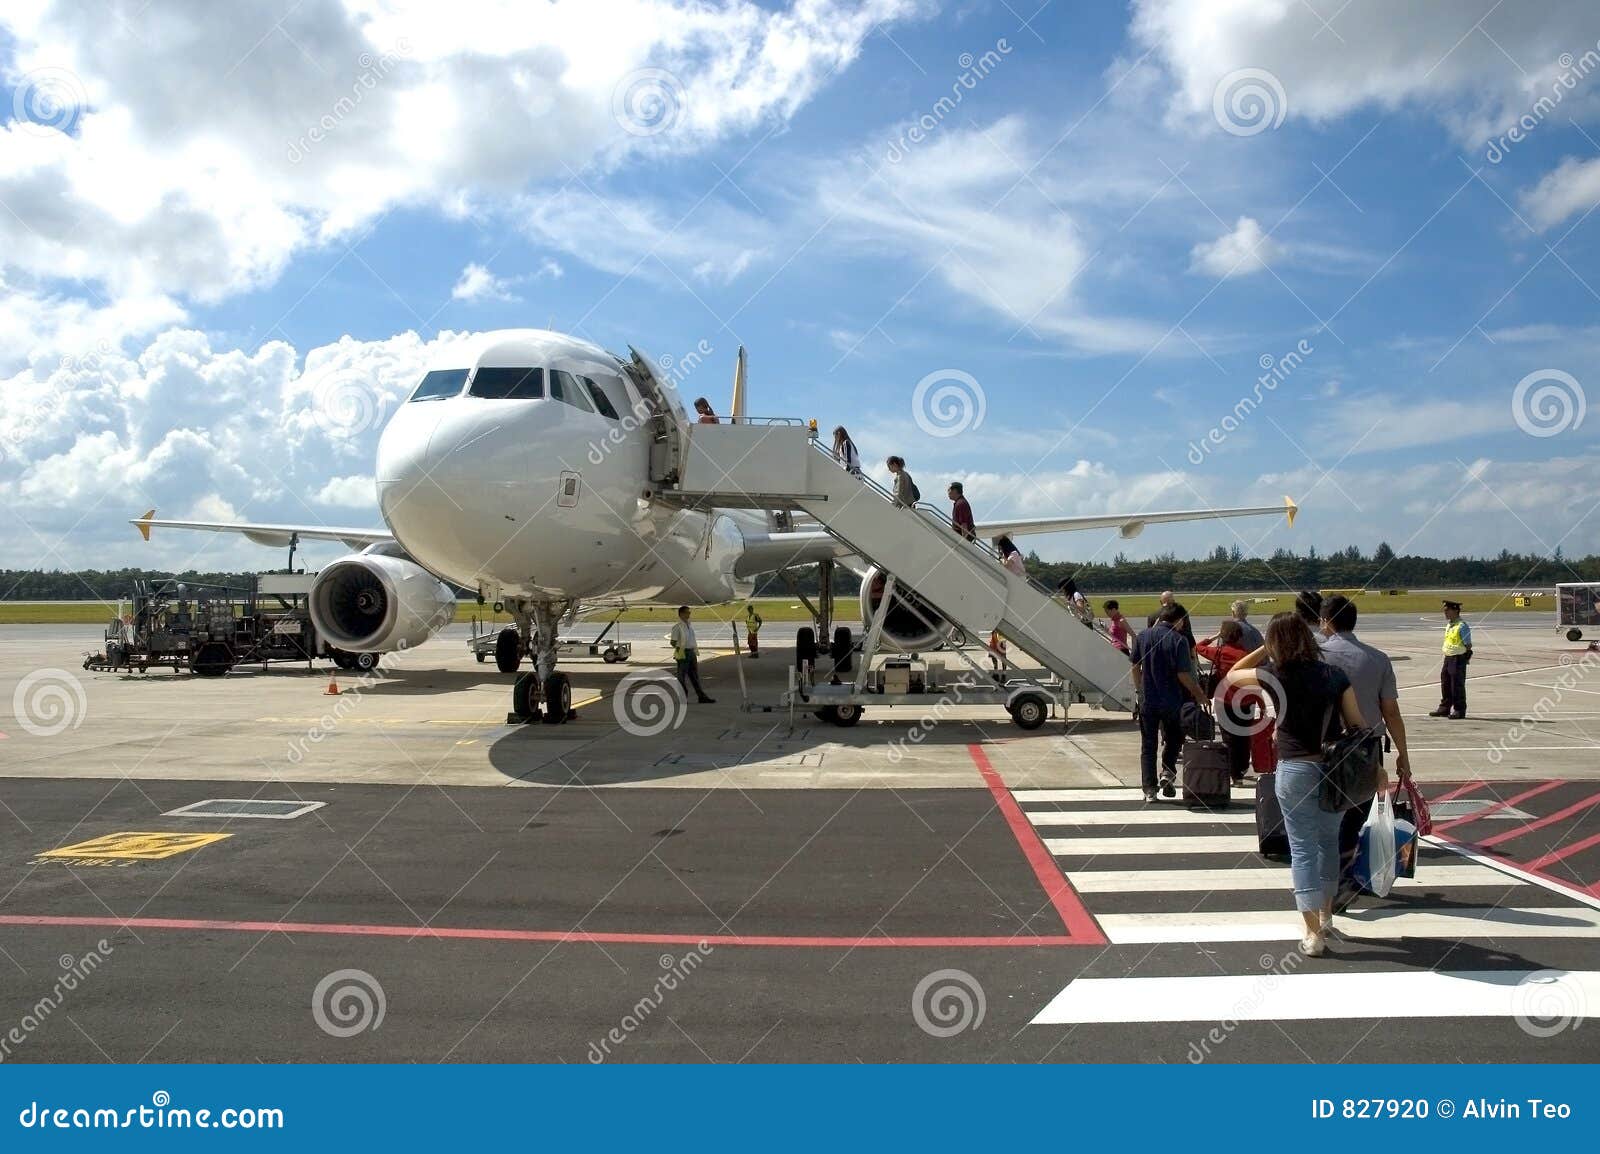 passengers boarding a plane